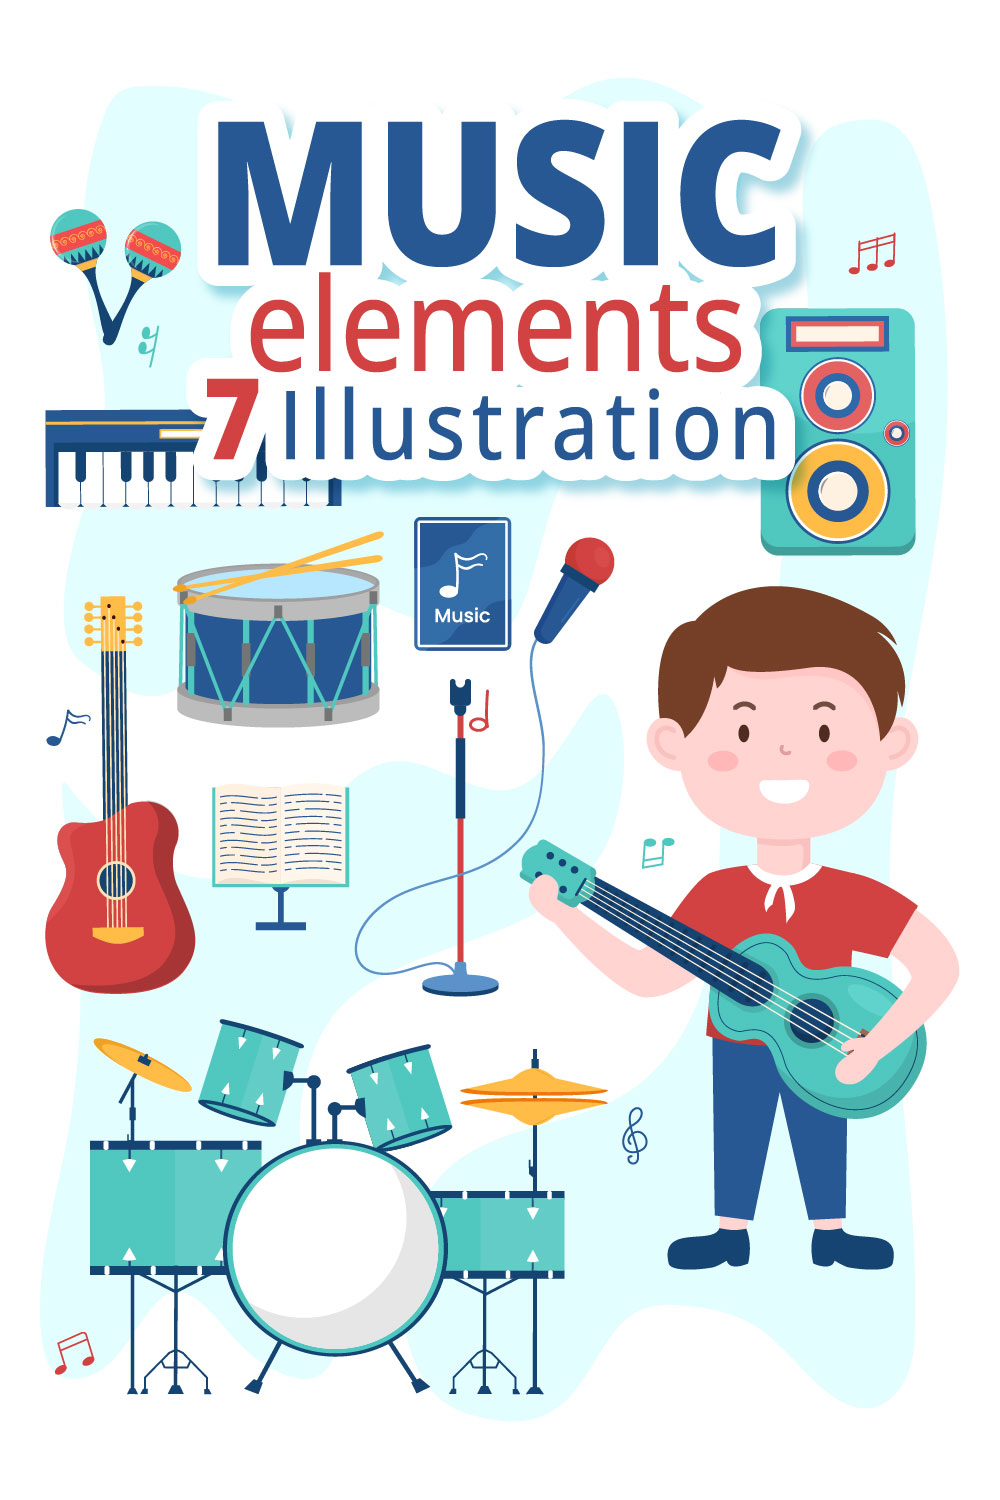 7 Music Elements Vector Illustration pinterest preview image.